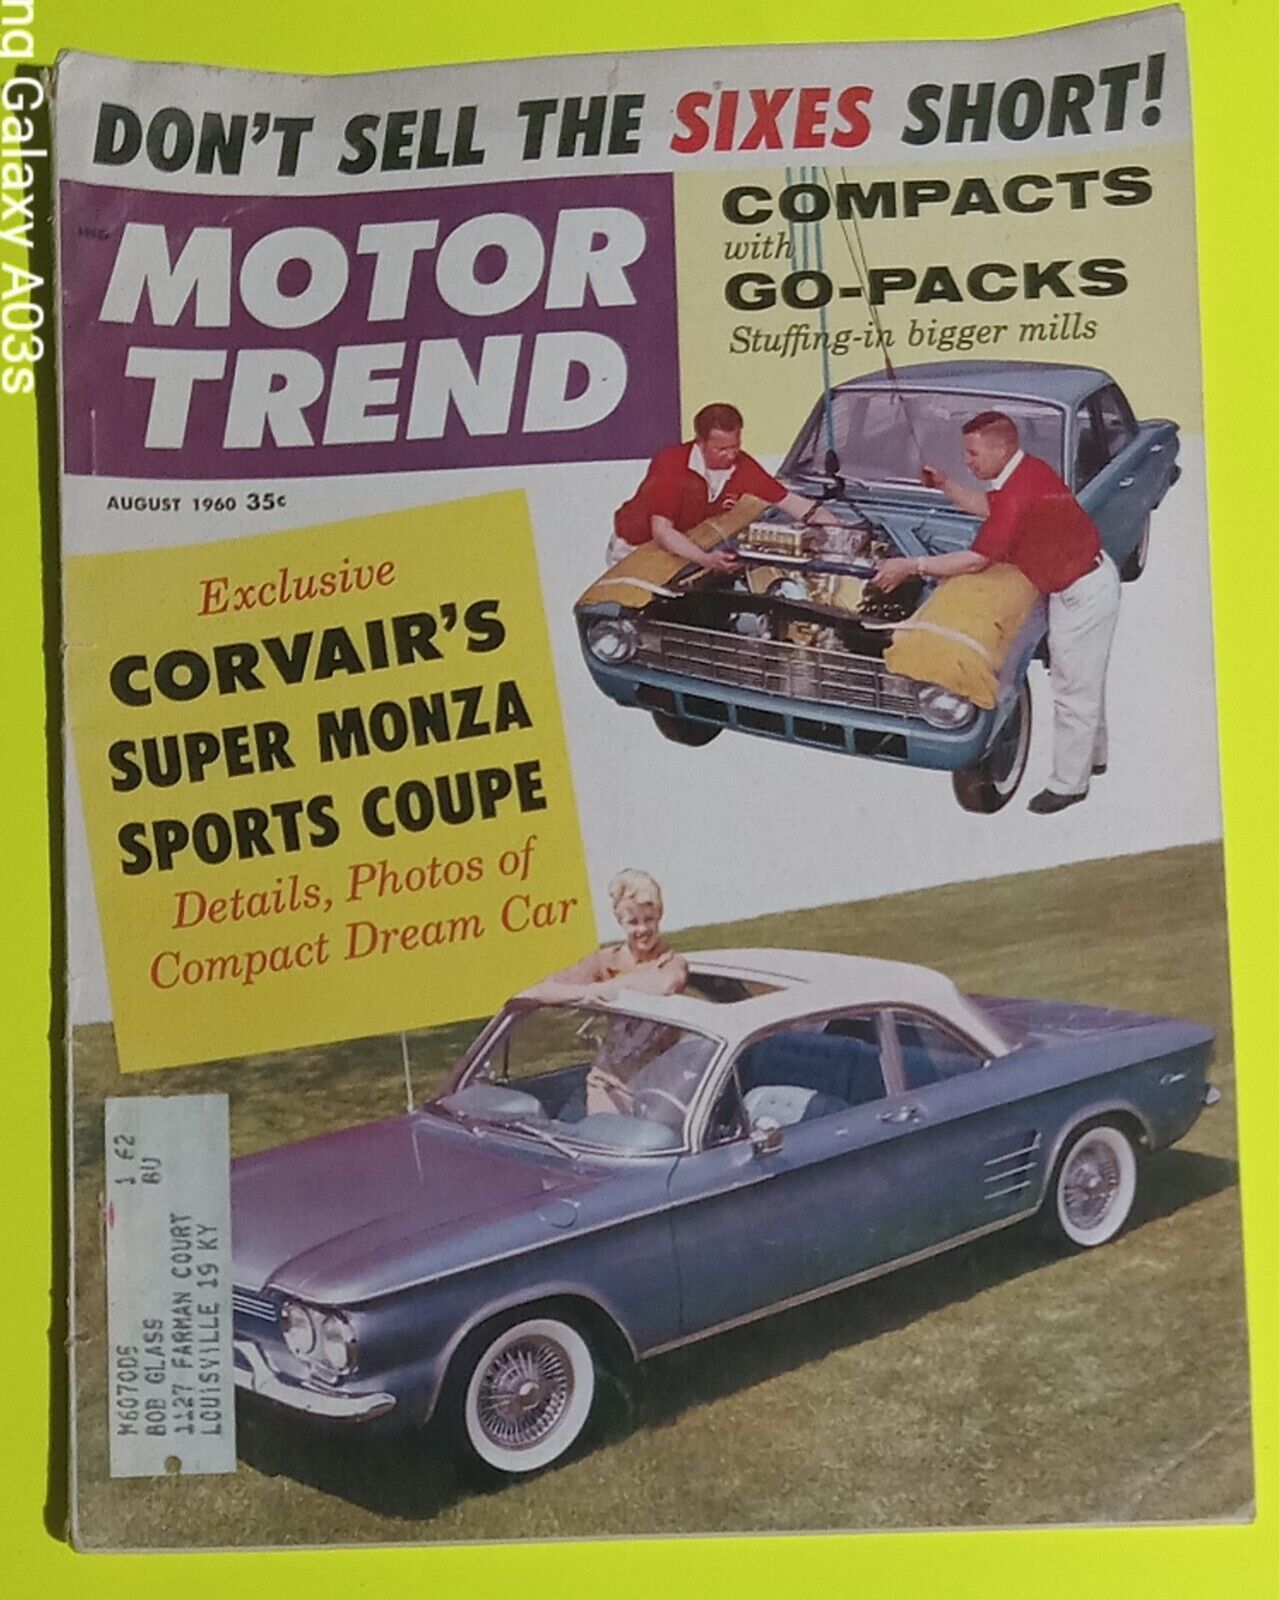 Motor Trend August 1960 Magazine